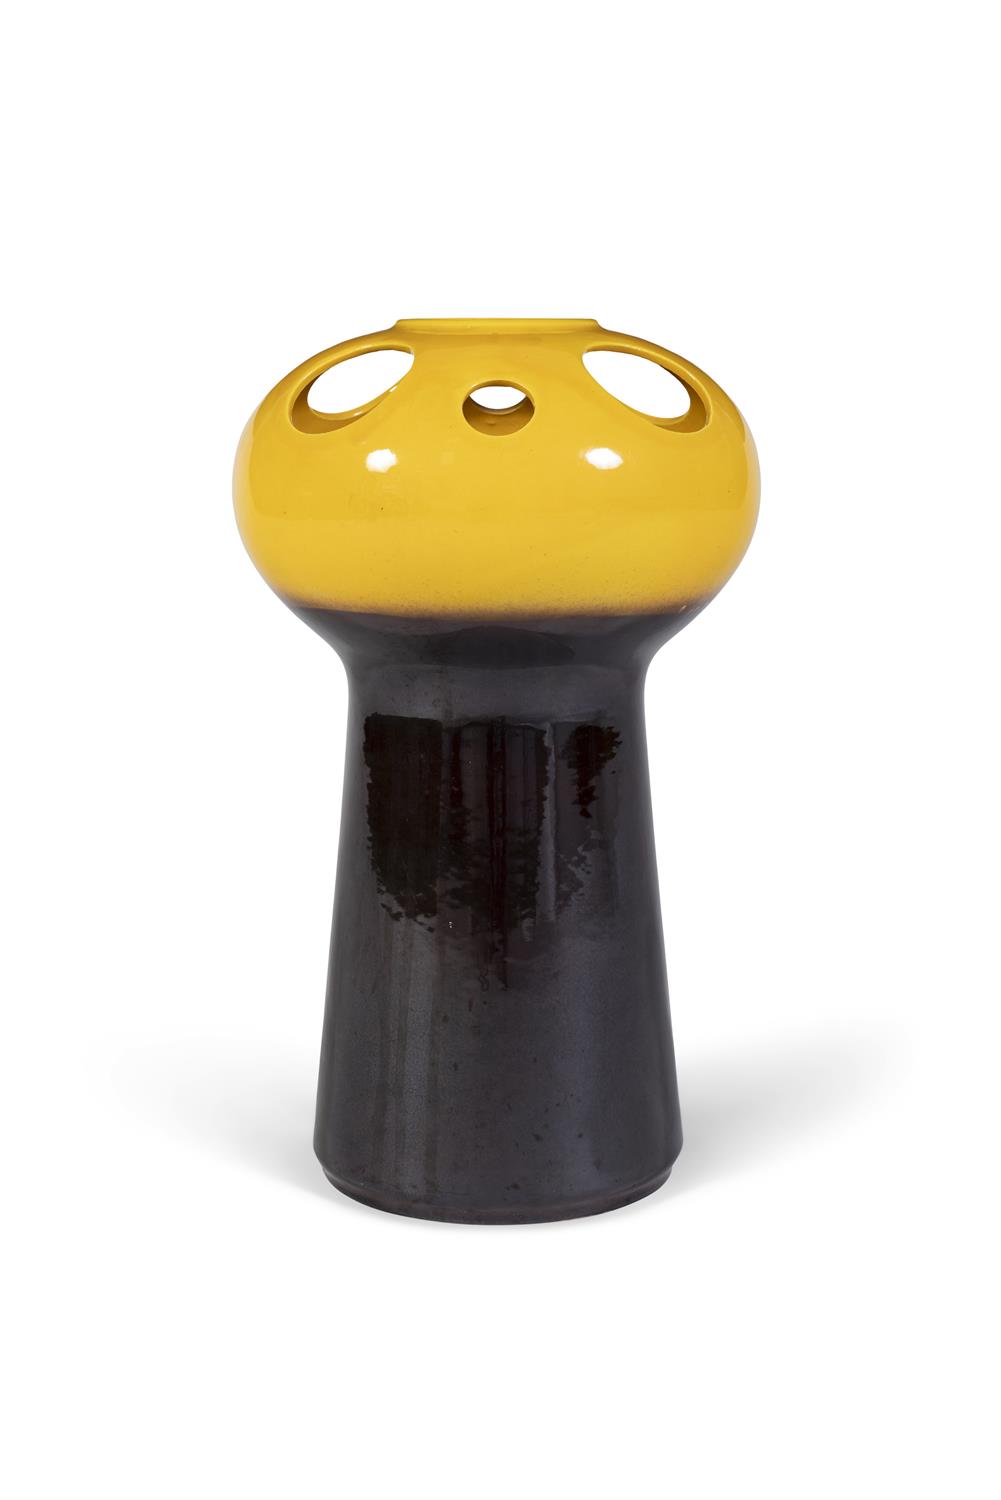 VASE A yellow and black ceramic vase. - Image 3 of 6